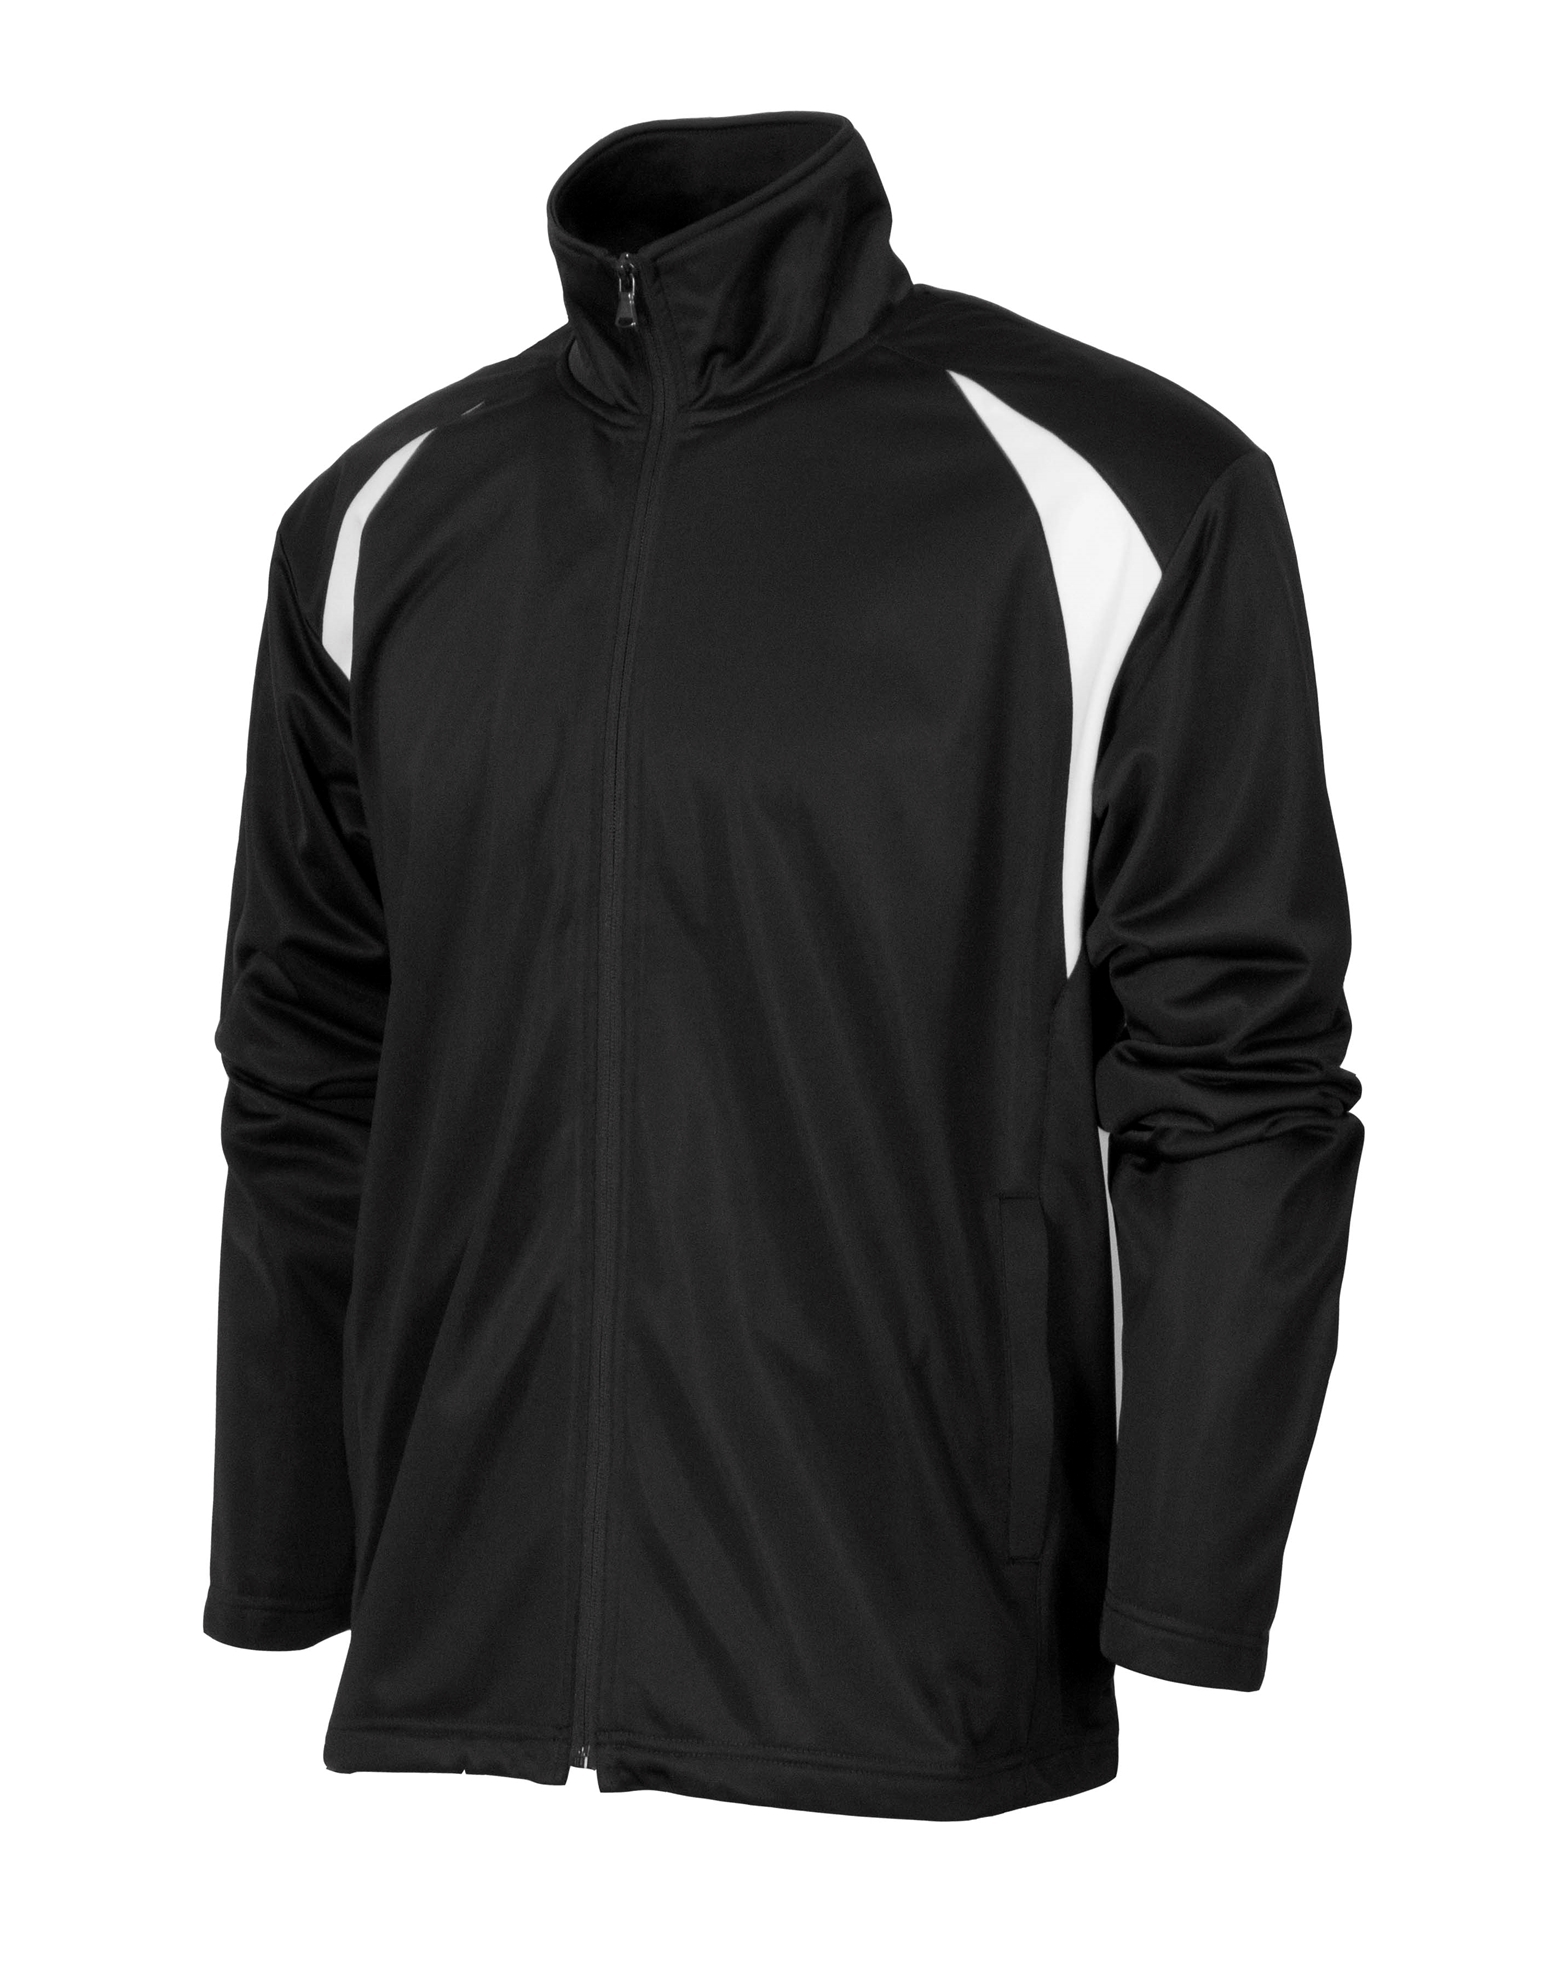 BAW Athletic Wear TC950 - Men's Colorblock Tricot Jacket $24.50 - Outerwear